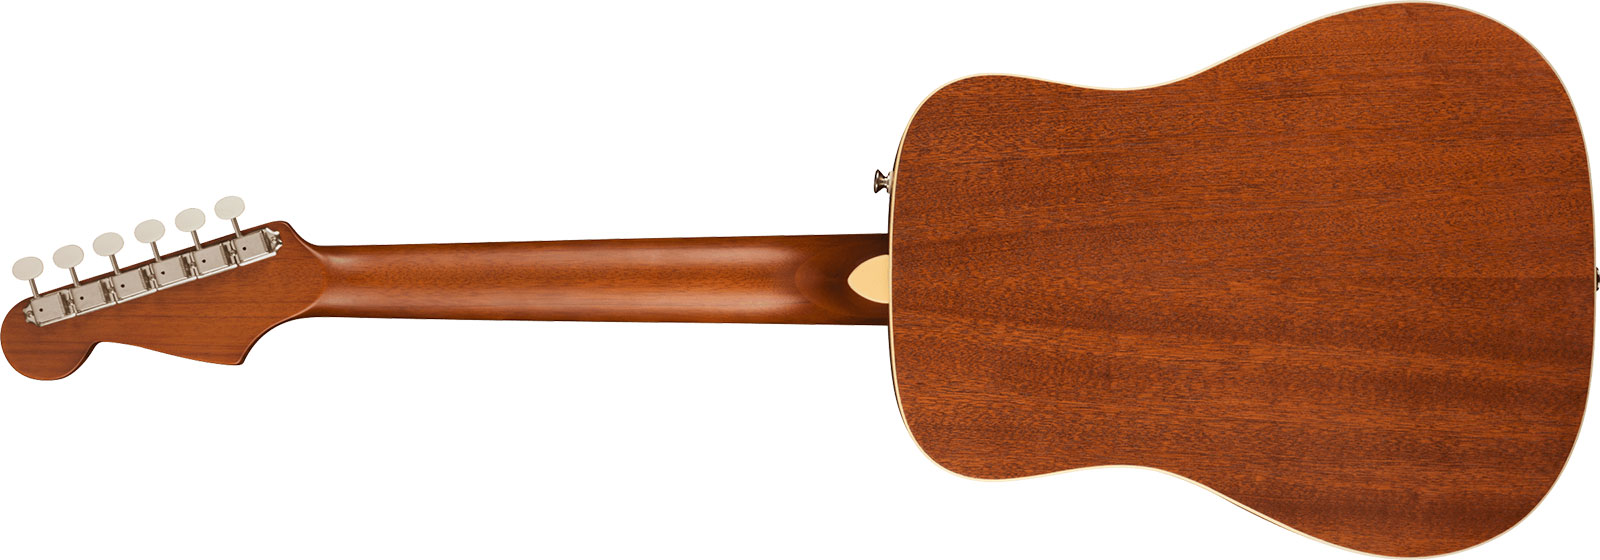 Fender Redondo Mini All Mahogany California Ltd Dreadnought 1/2 Tout Acajou Noy - Natural Satin - Guitarra acústica de viaje - Variation 1